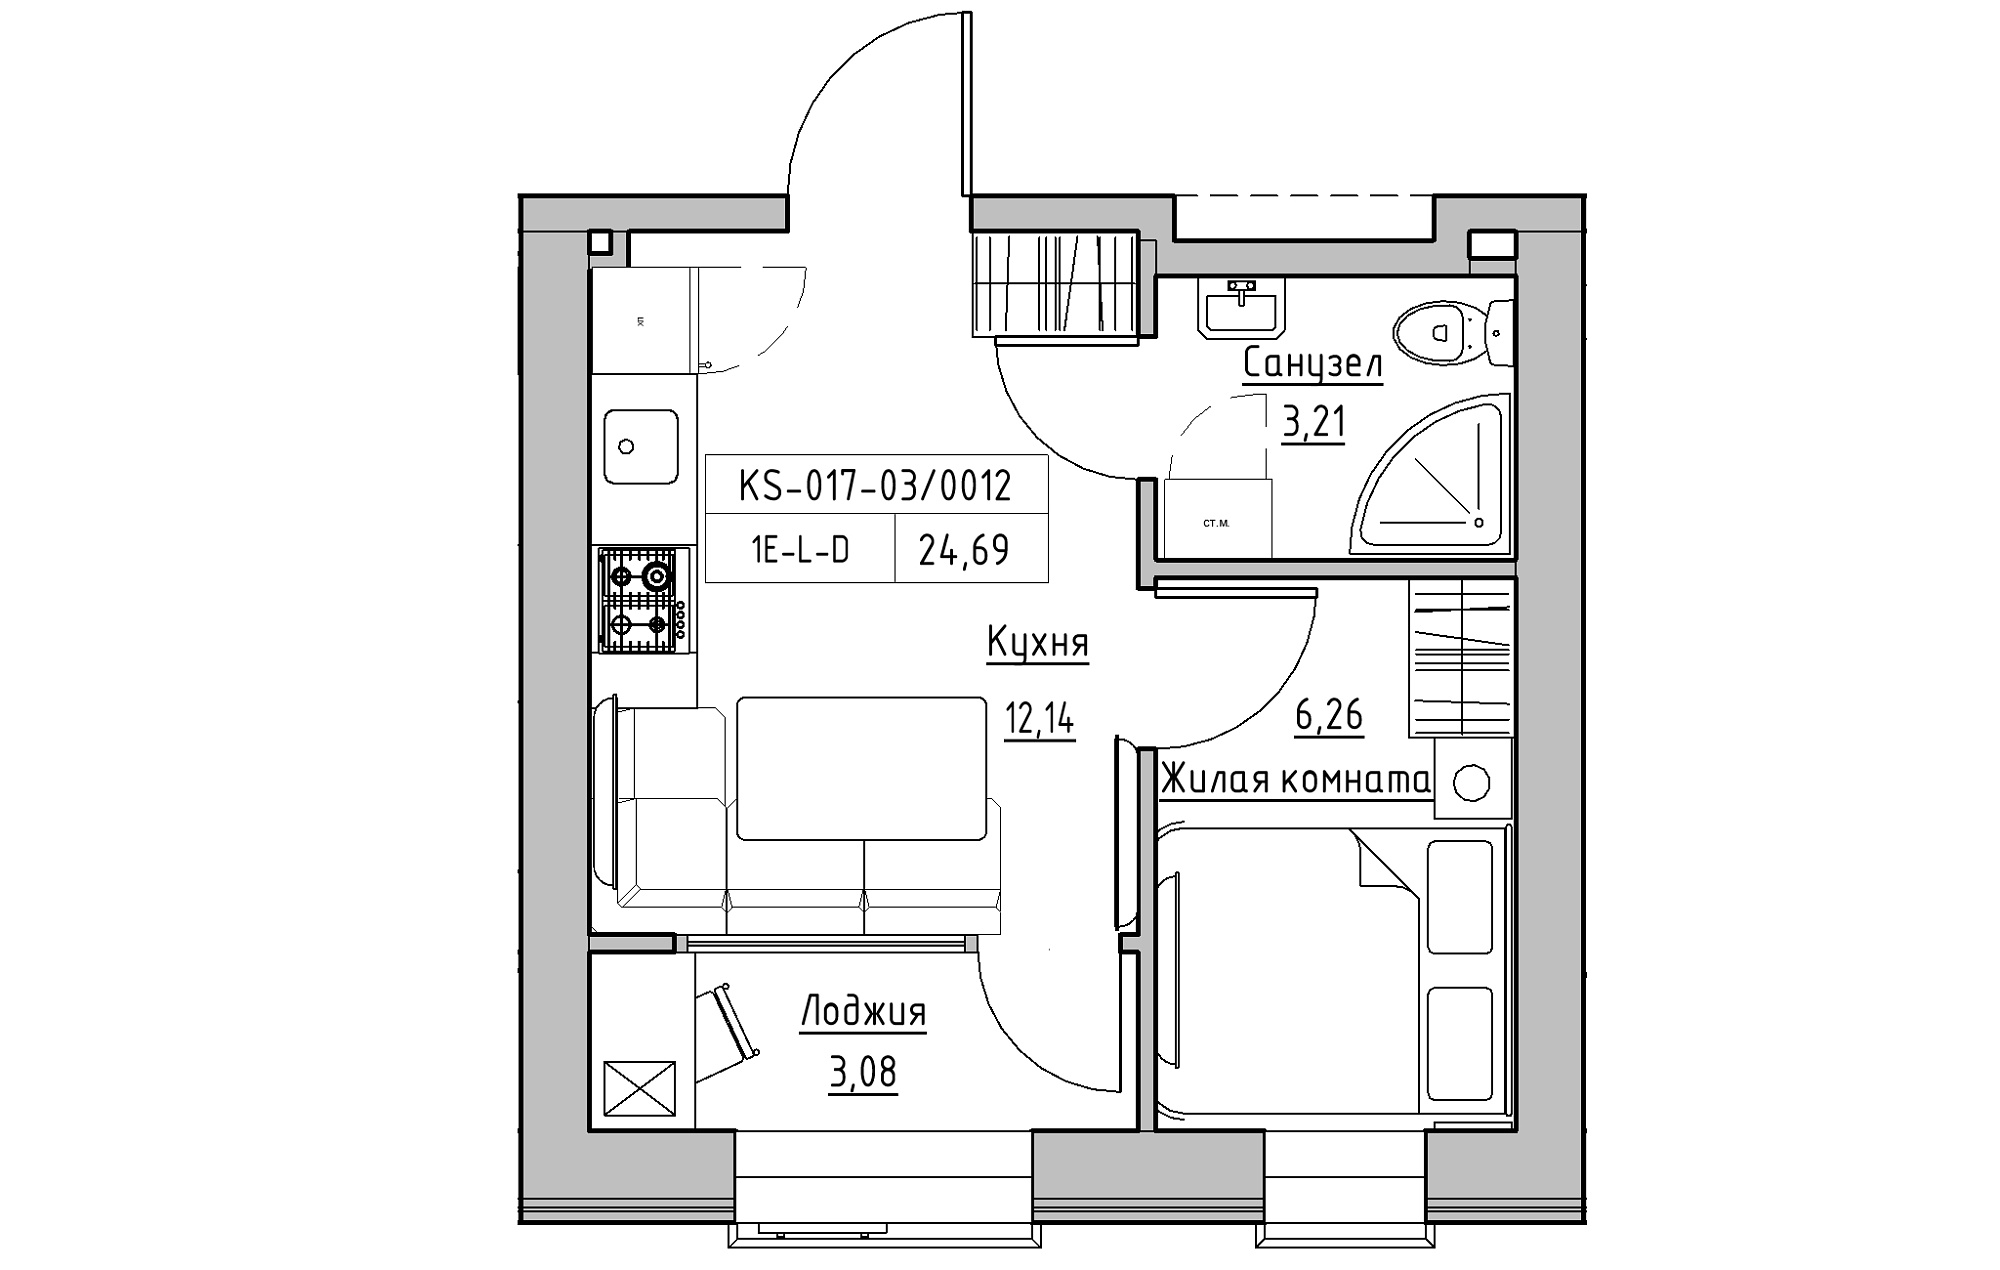 Planning 1-rm flats area 24.69m2, KS-017-03/0012.